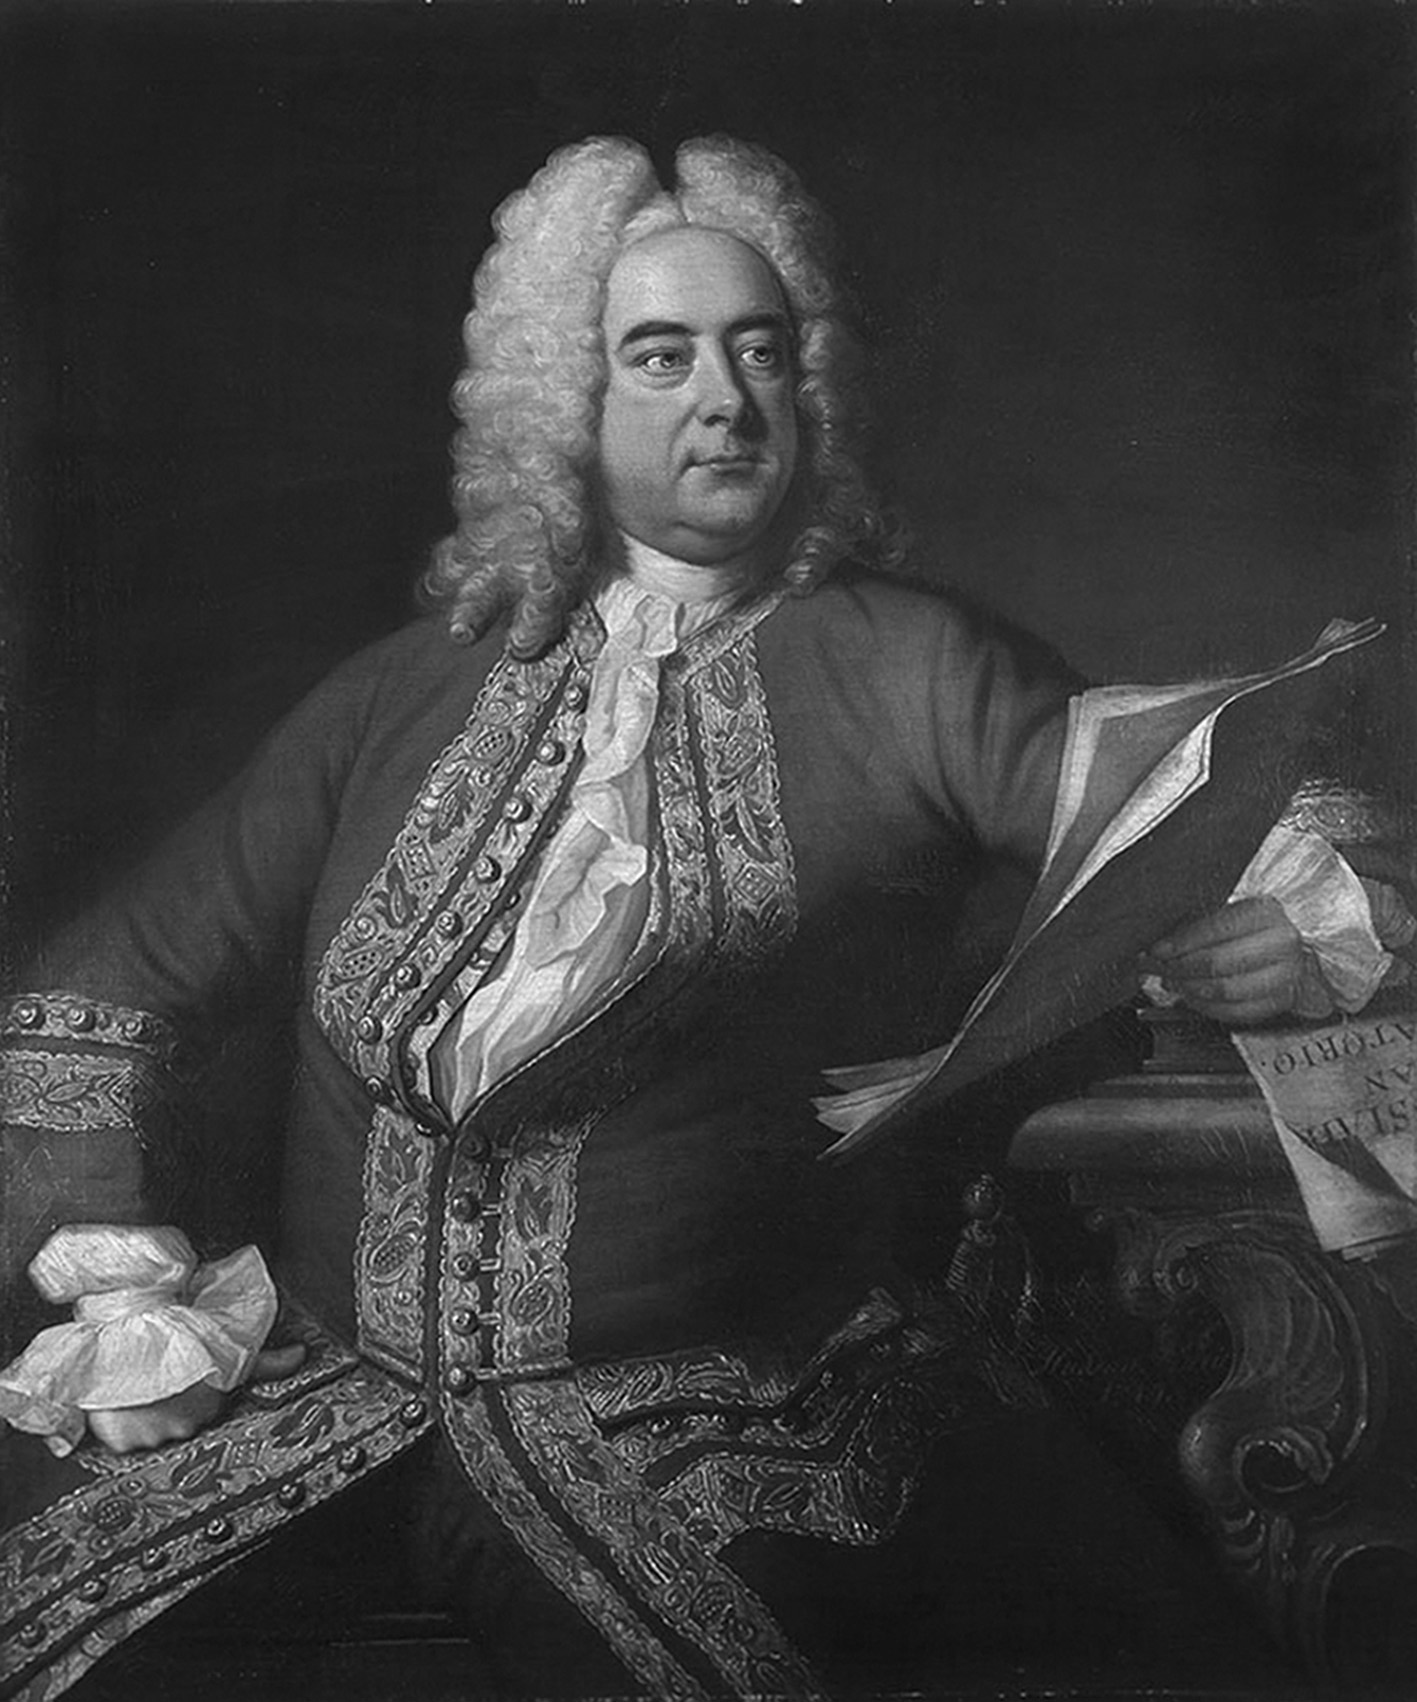 Georg Friedrich Händel (Halle na Saali, 23. veljače 1685. – London, 14. travnja 1759.)